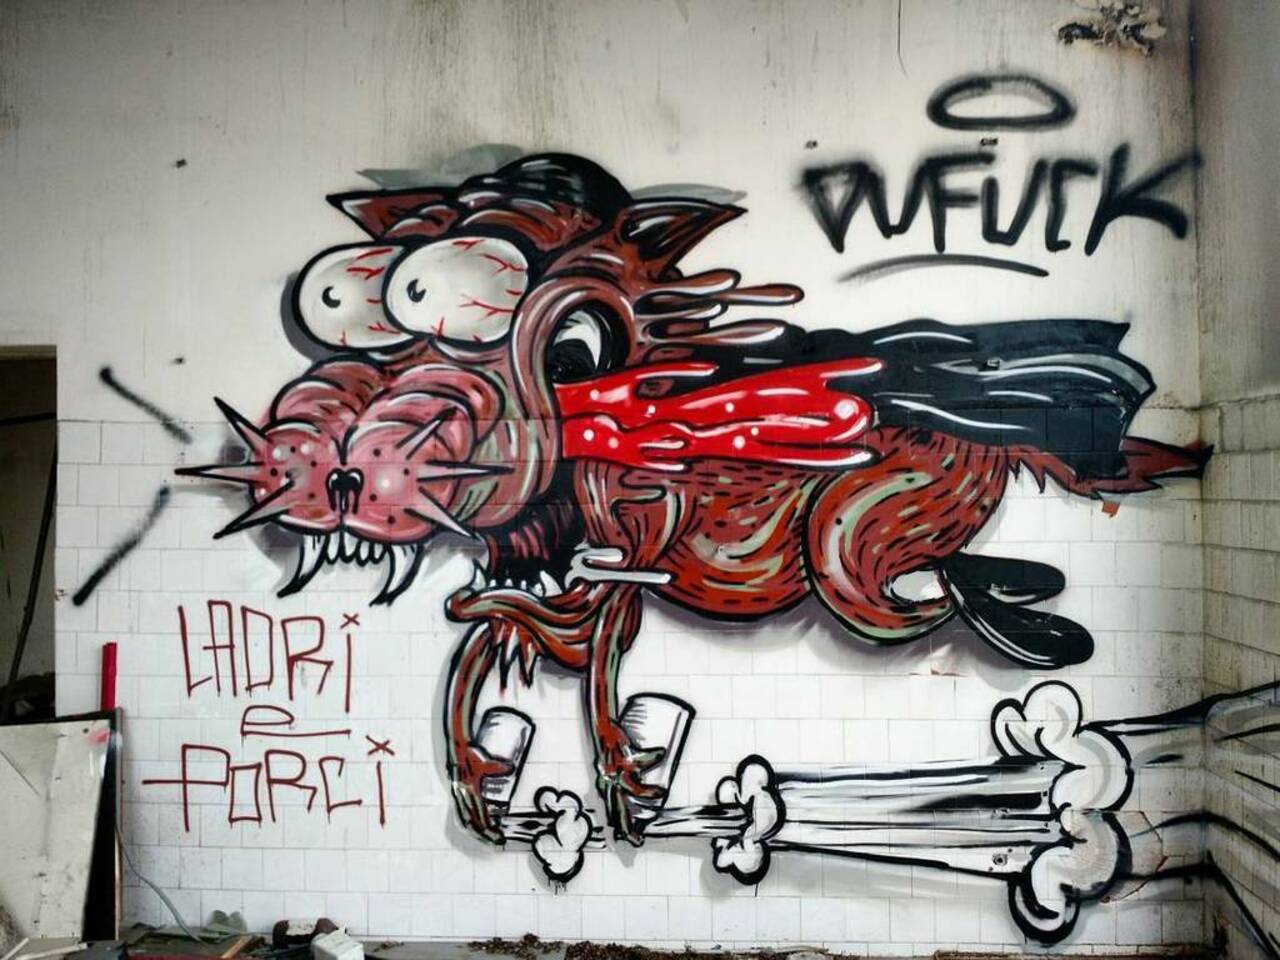 Ladri e porci by #dufuck #streetart #streetartphotography #poetry #secretplace #graffiti #streetartandgraffiti #str… https://t.co/wVNGfdlCtt